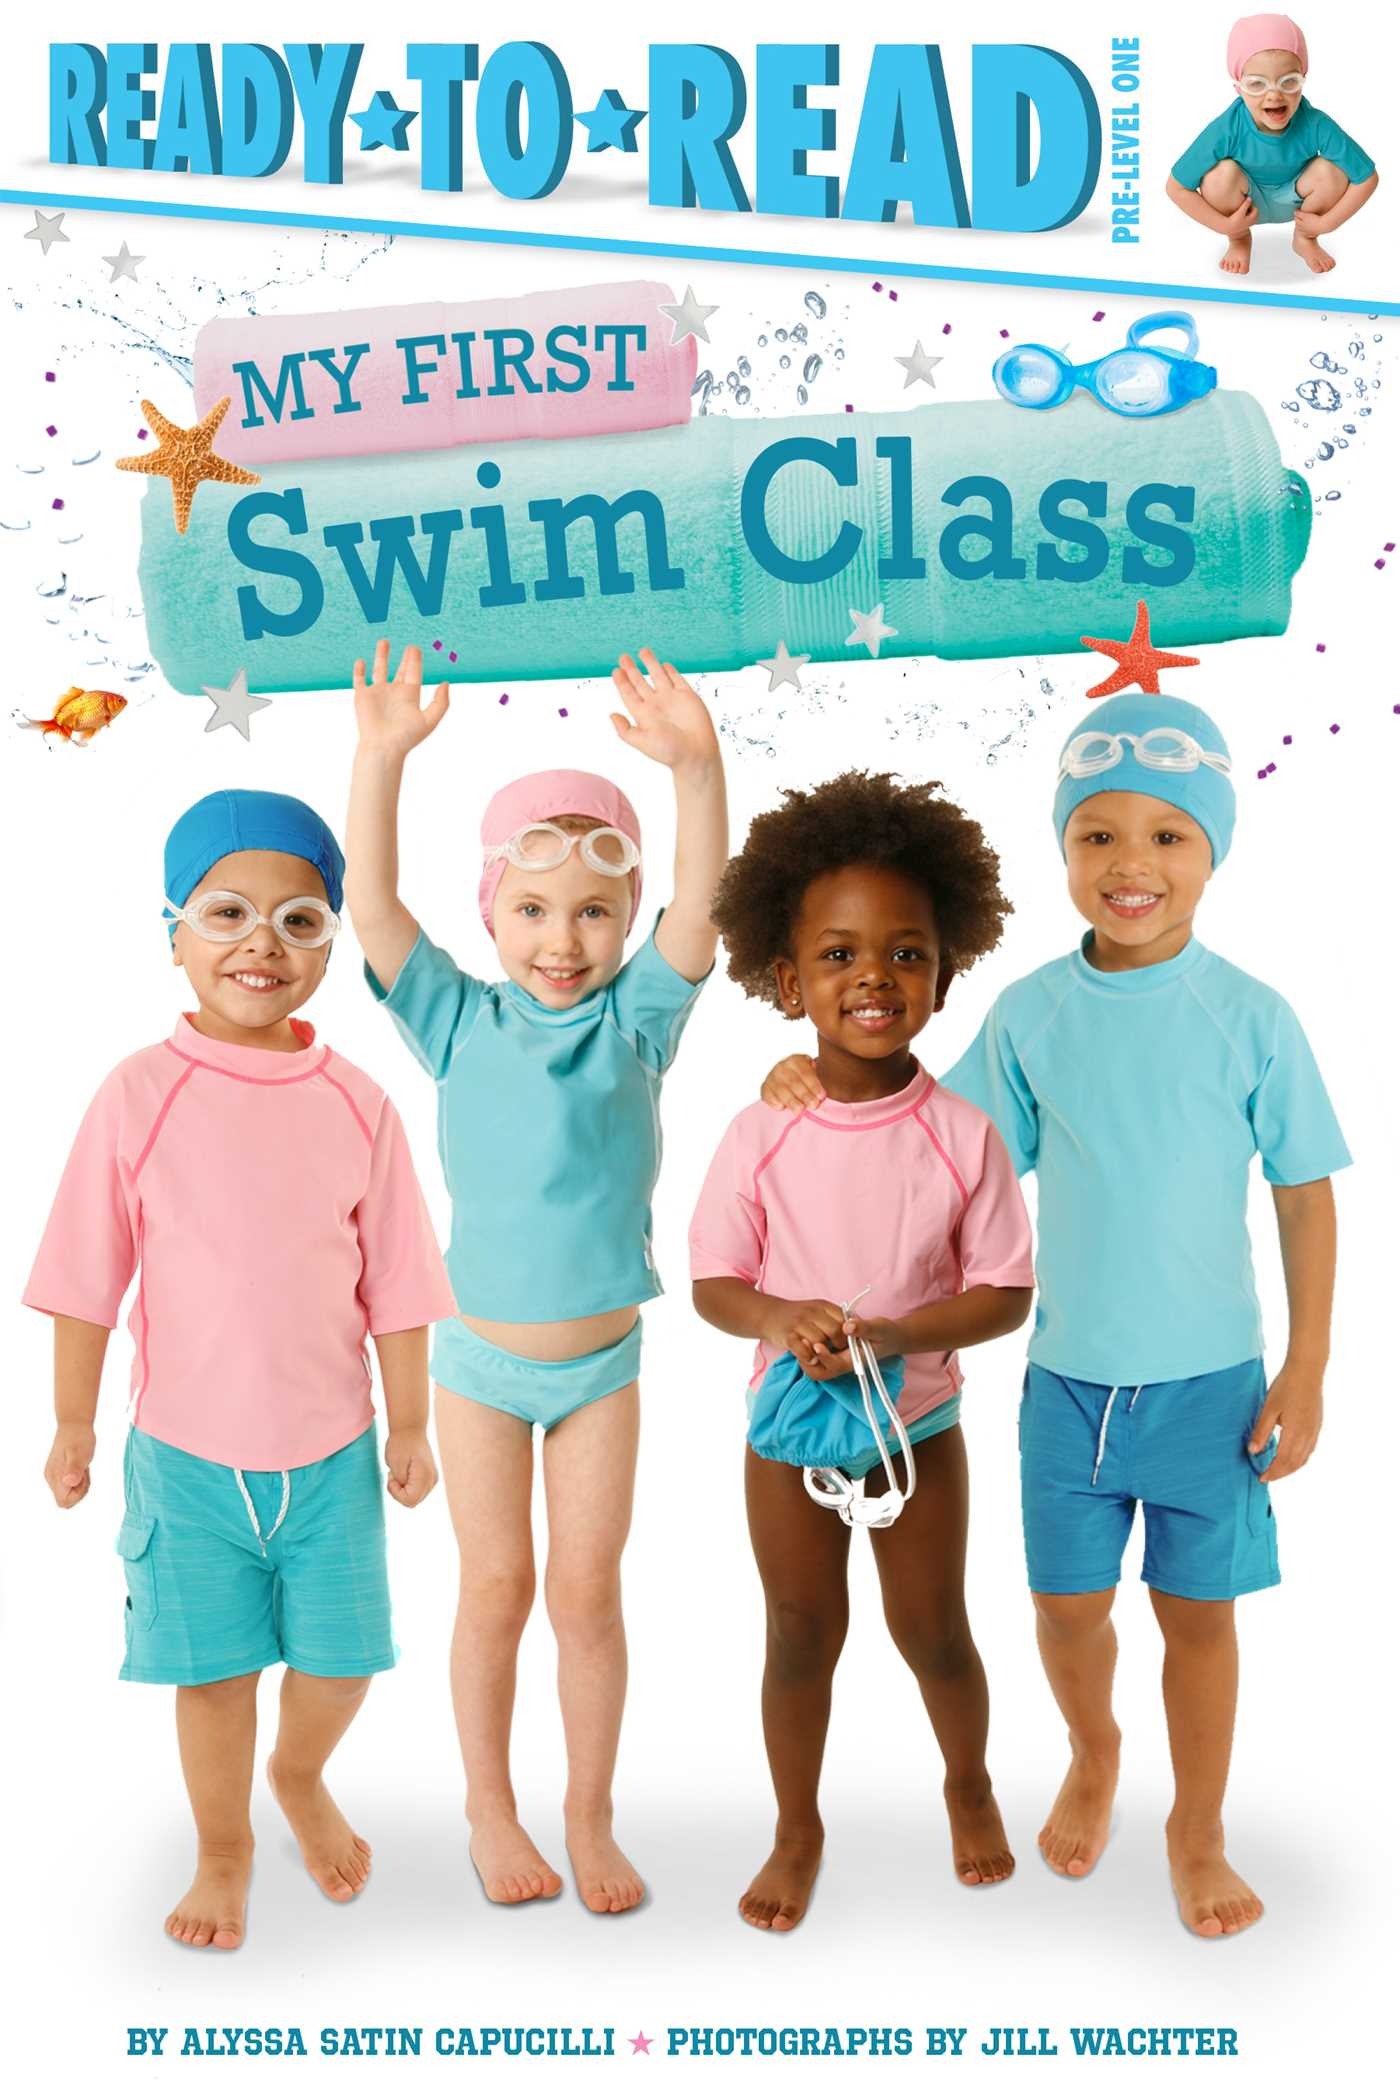 My first swim class